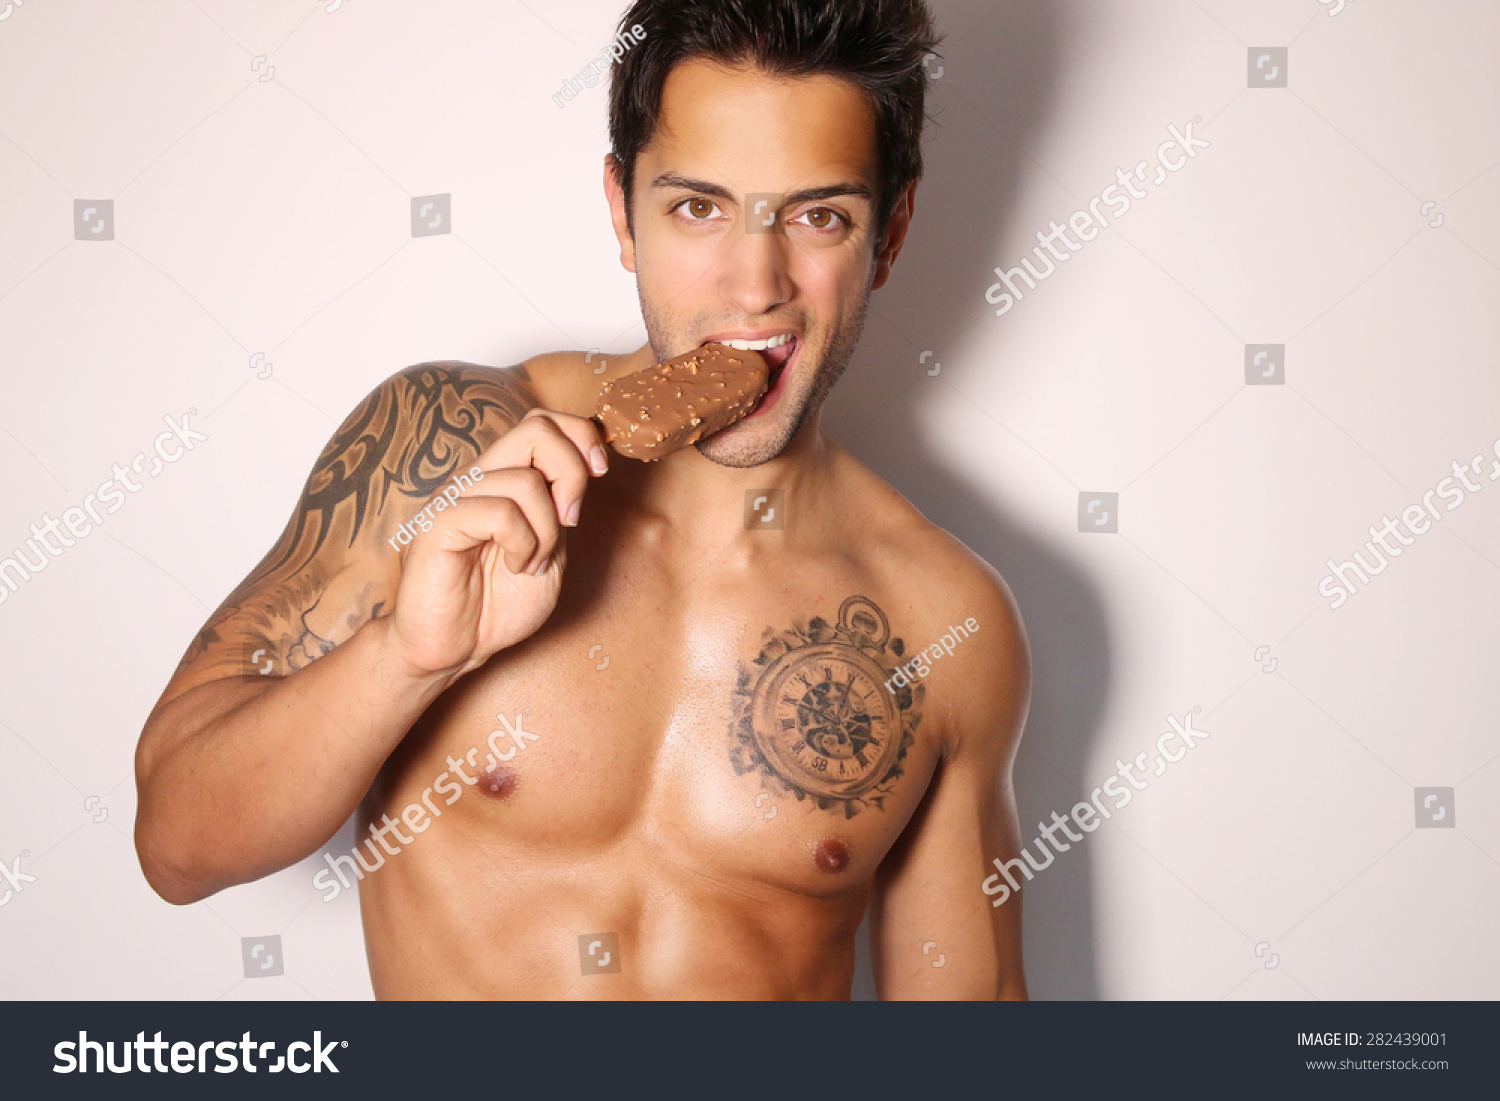 stock-photo-sexy-man-eating-ice-cream-282439001.jpg